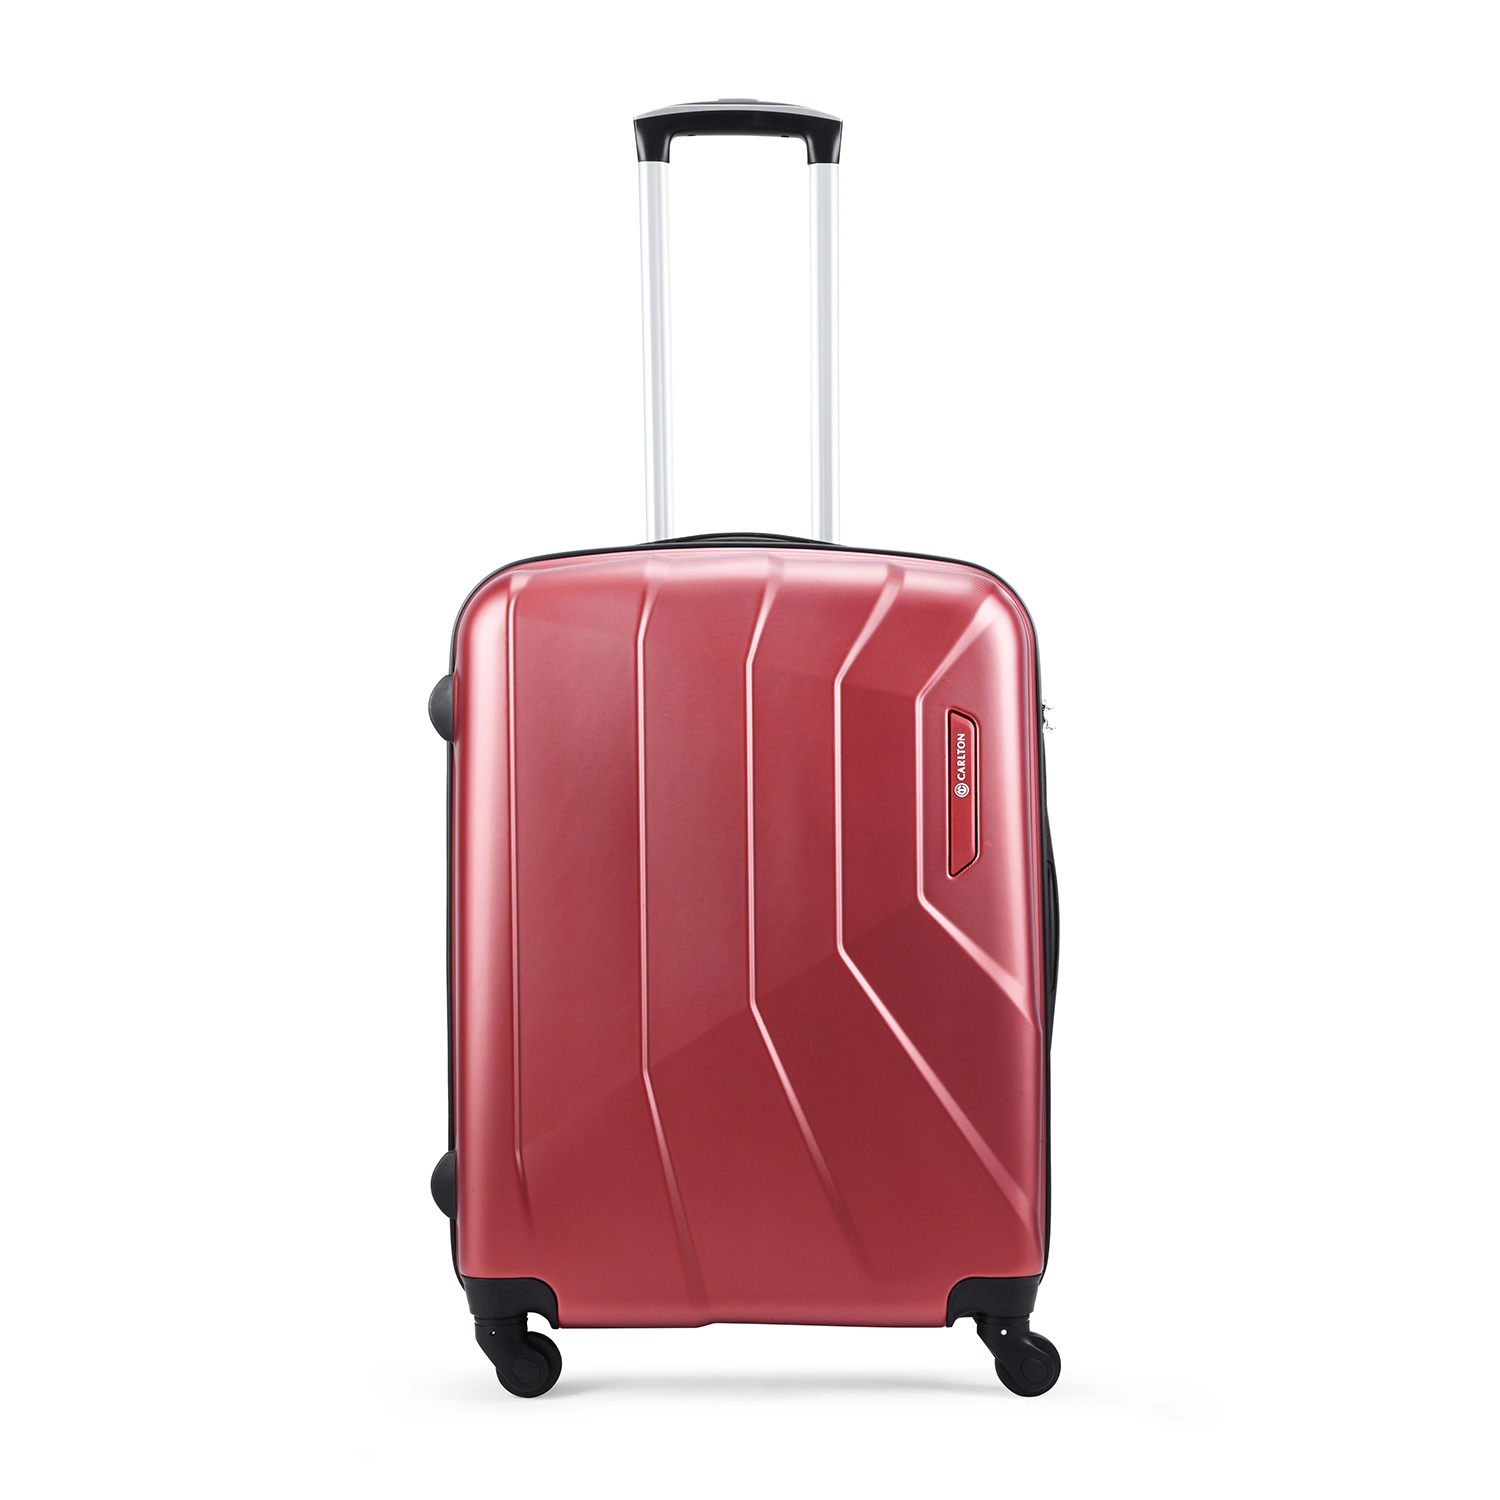 [8561402] Paddington resväska mellan röd